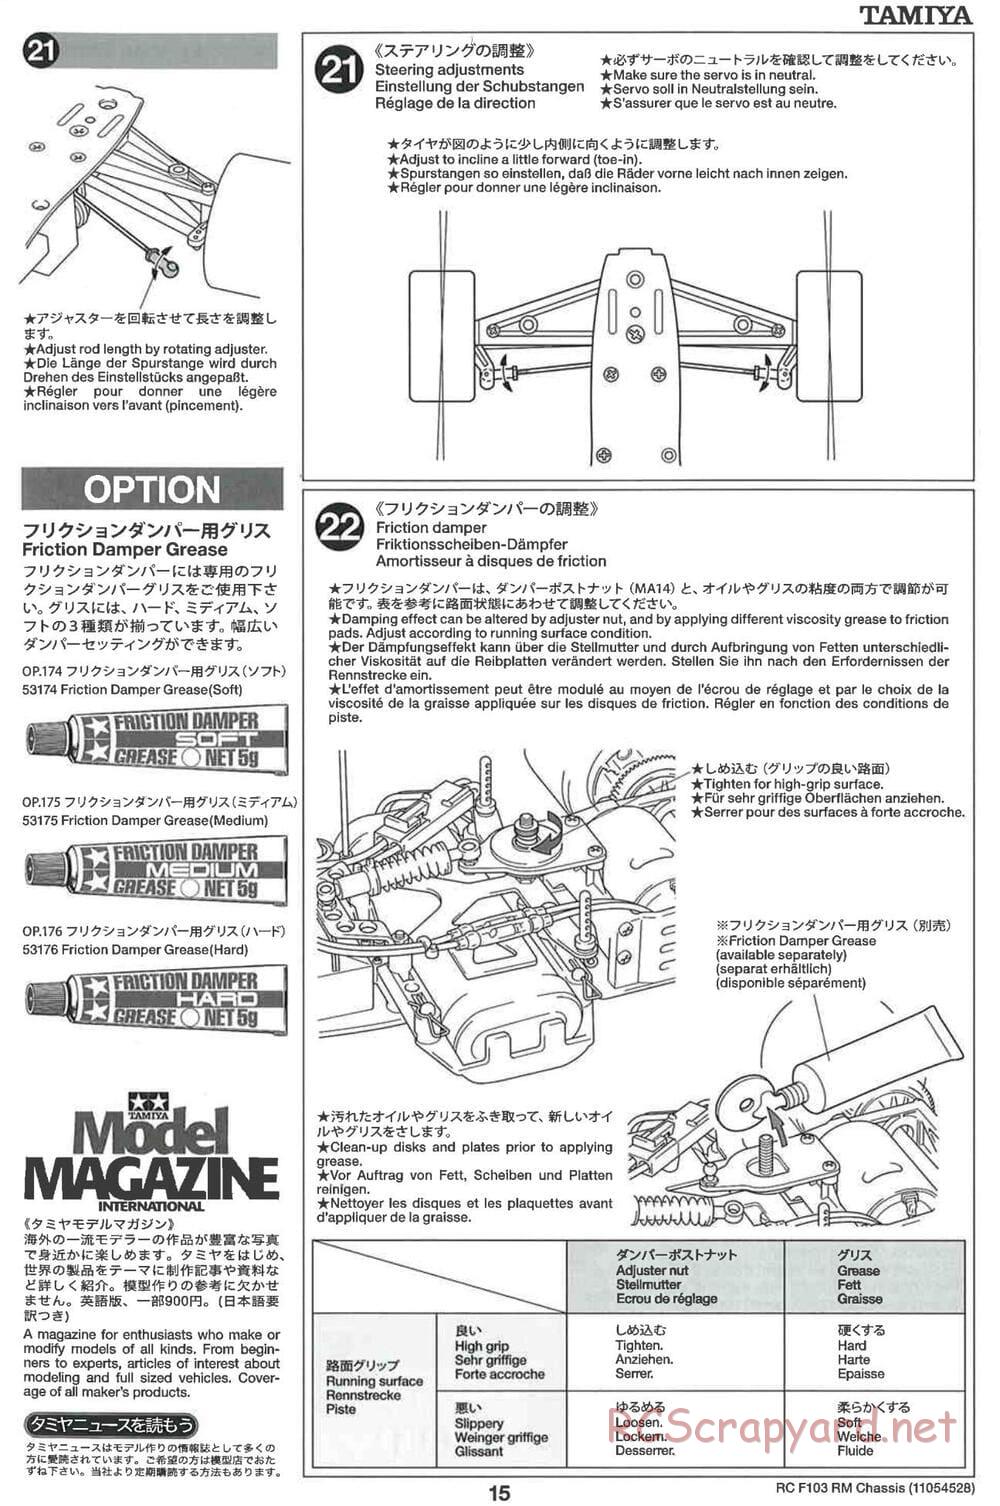 Tamiya - F103RM Chassis - Manual - Page 15